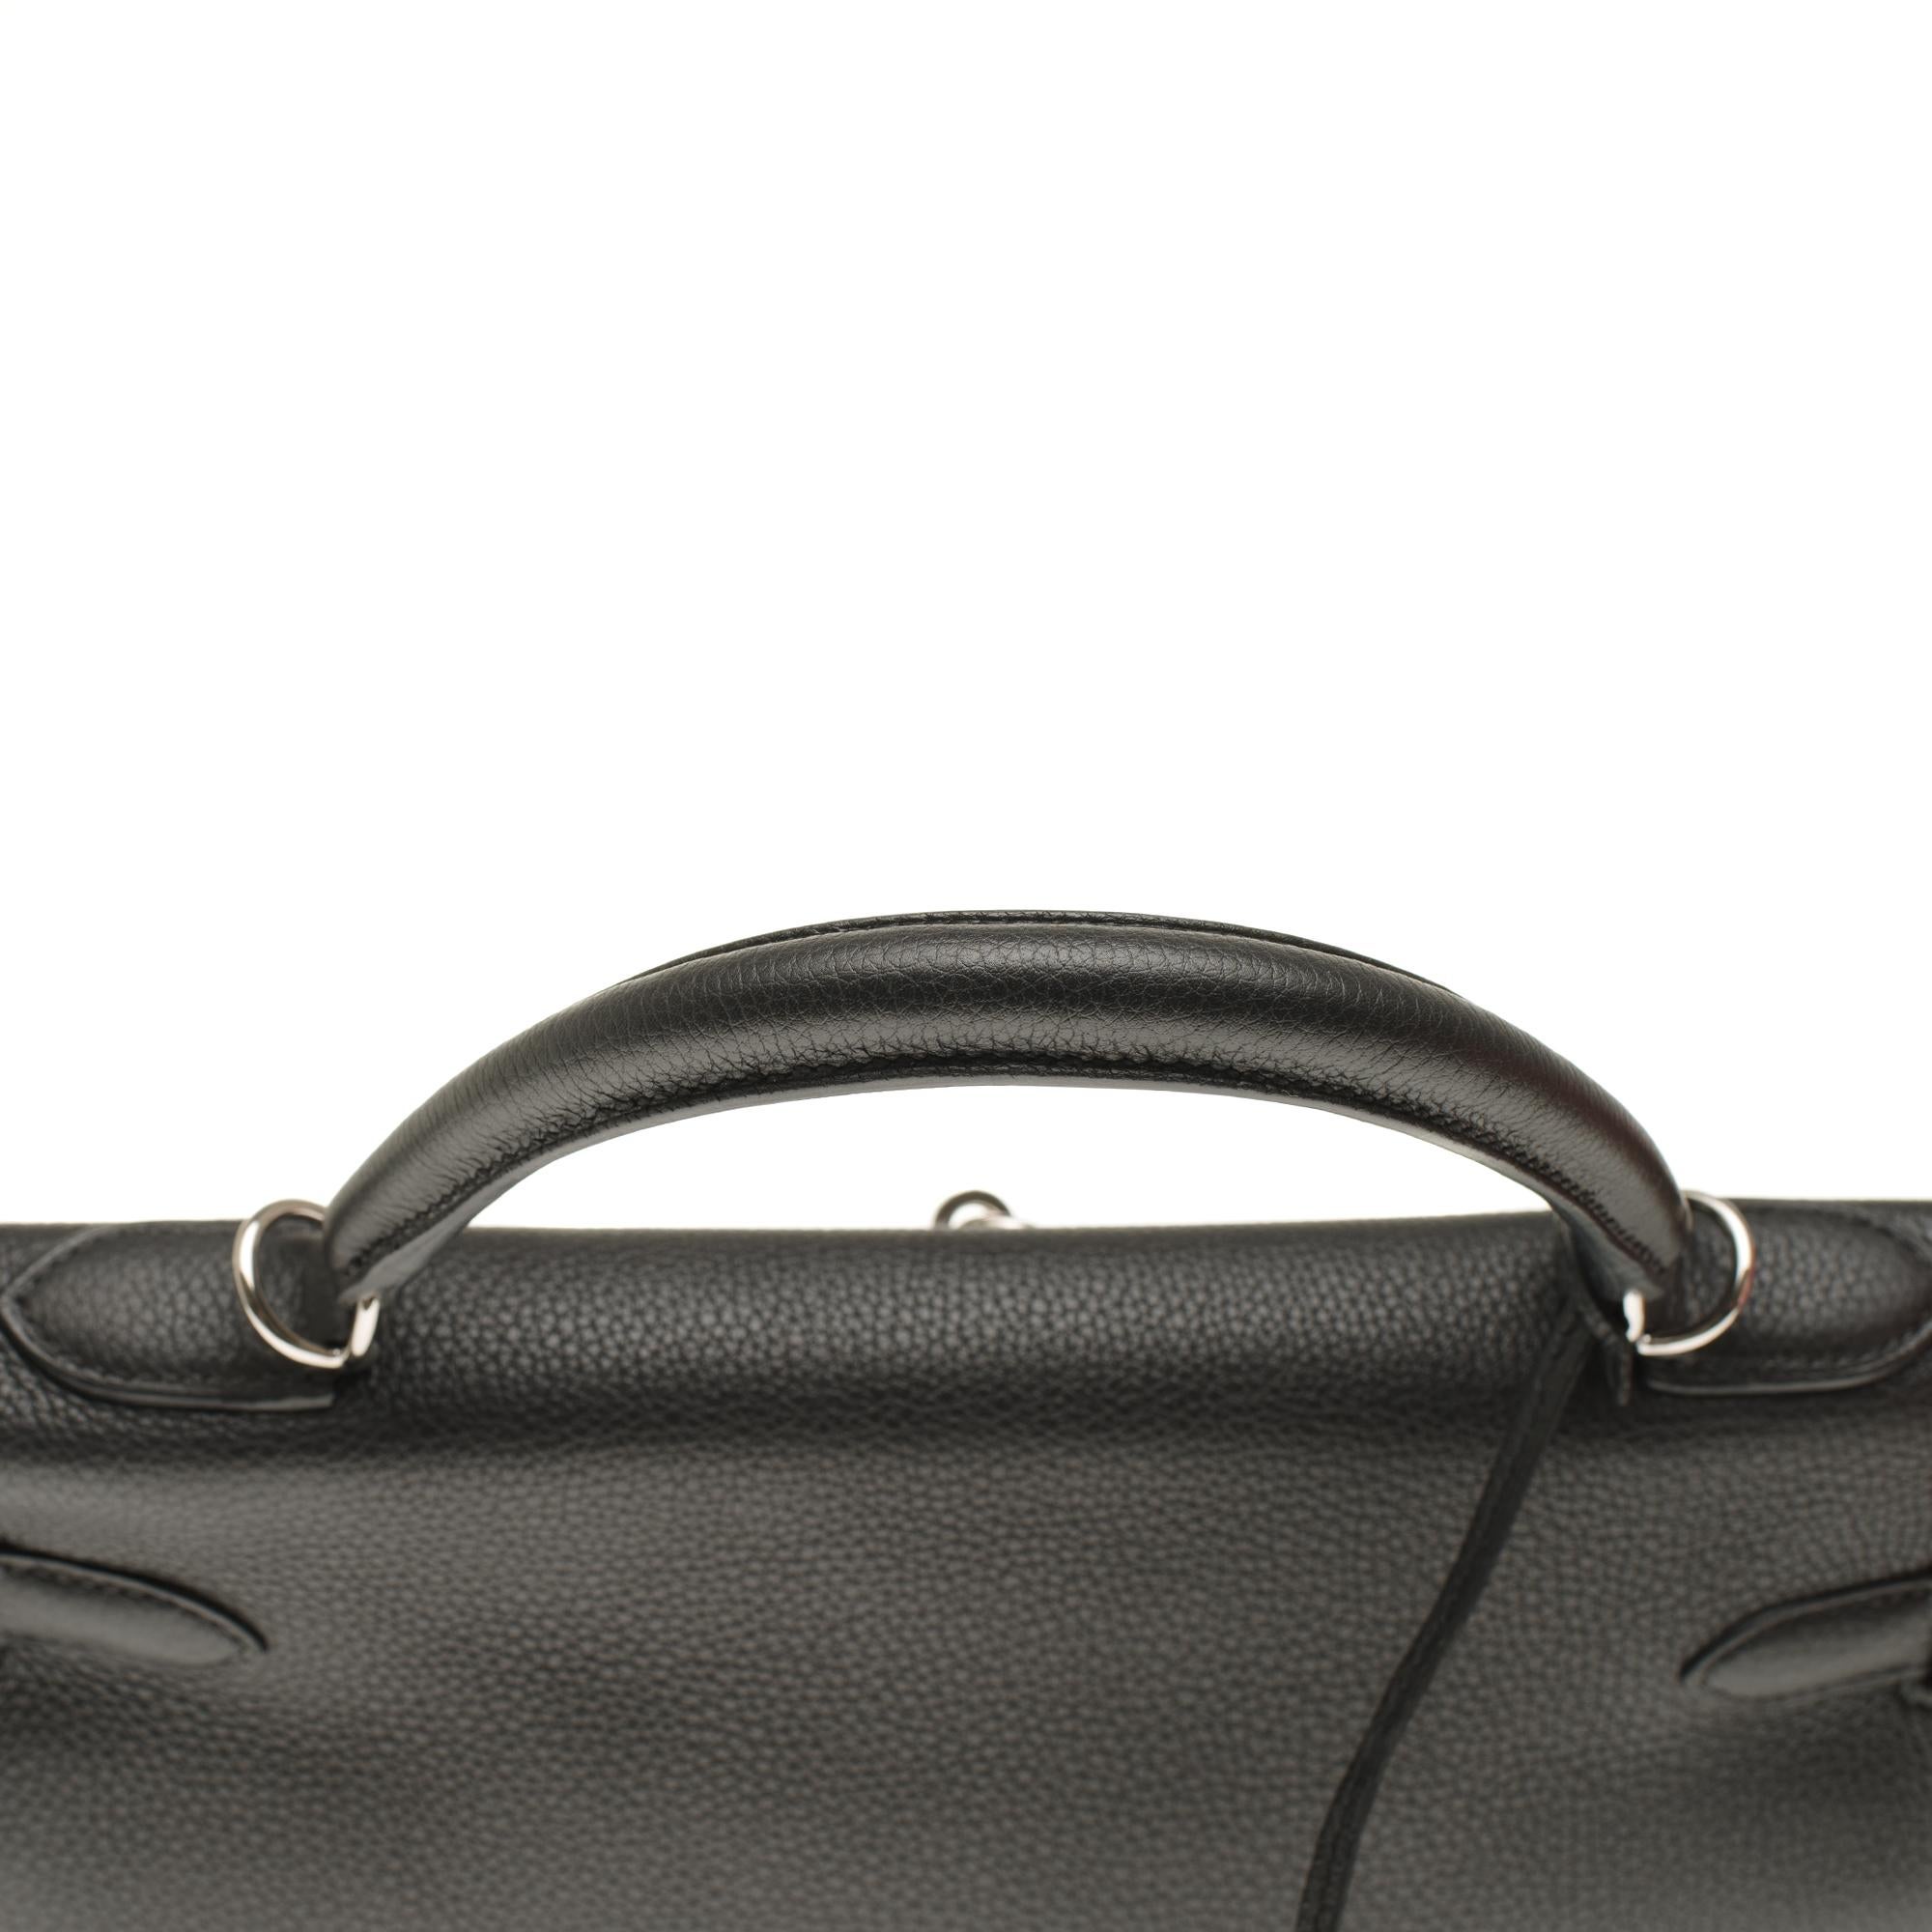 Hermès Kelly 32cm handbag with strap in black togo leather, silver hardware! 3